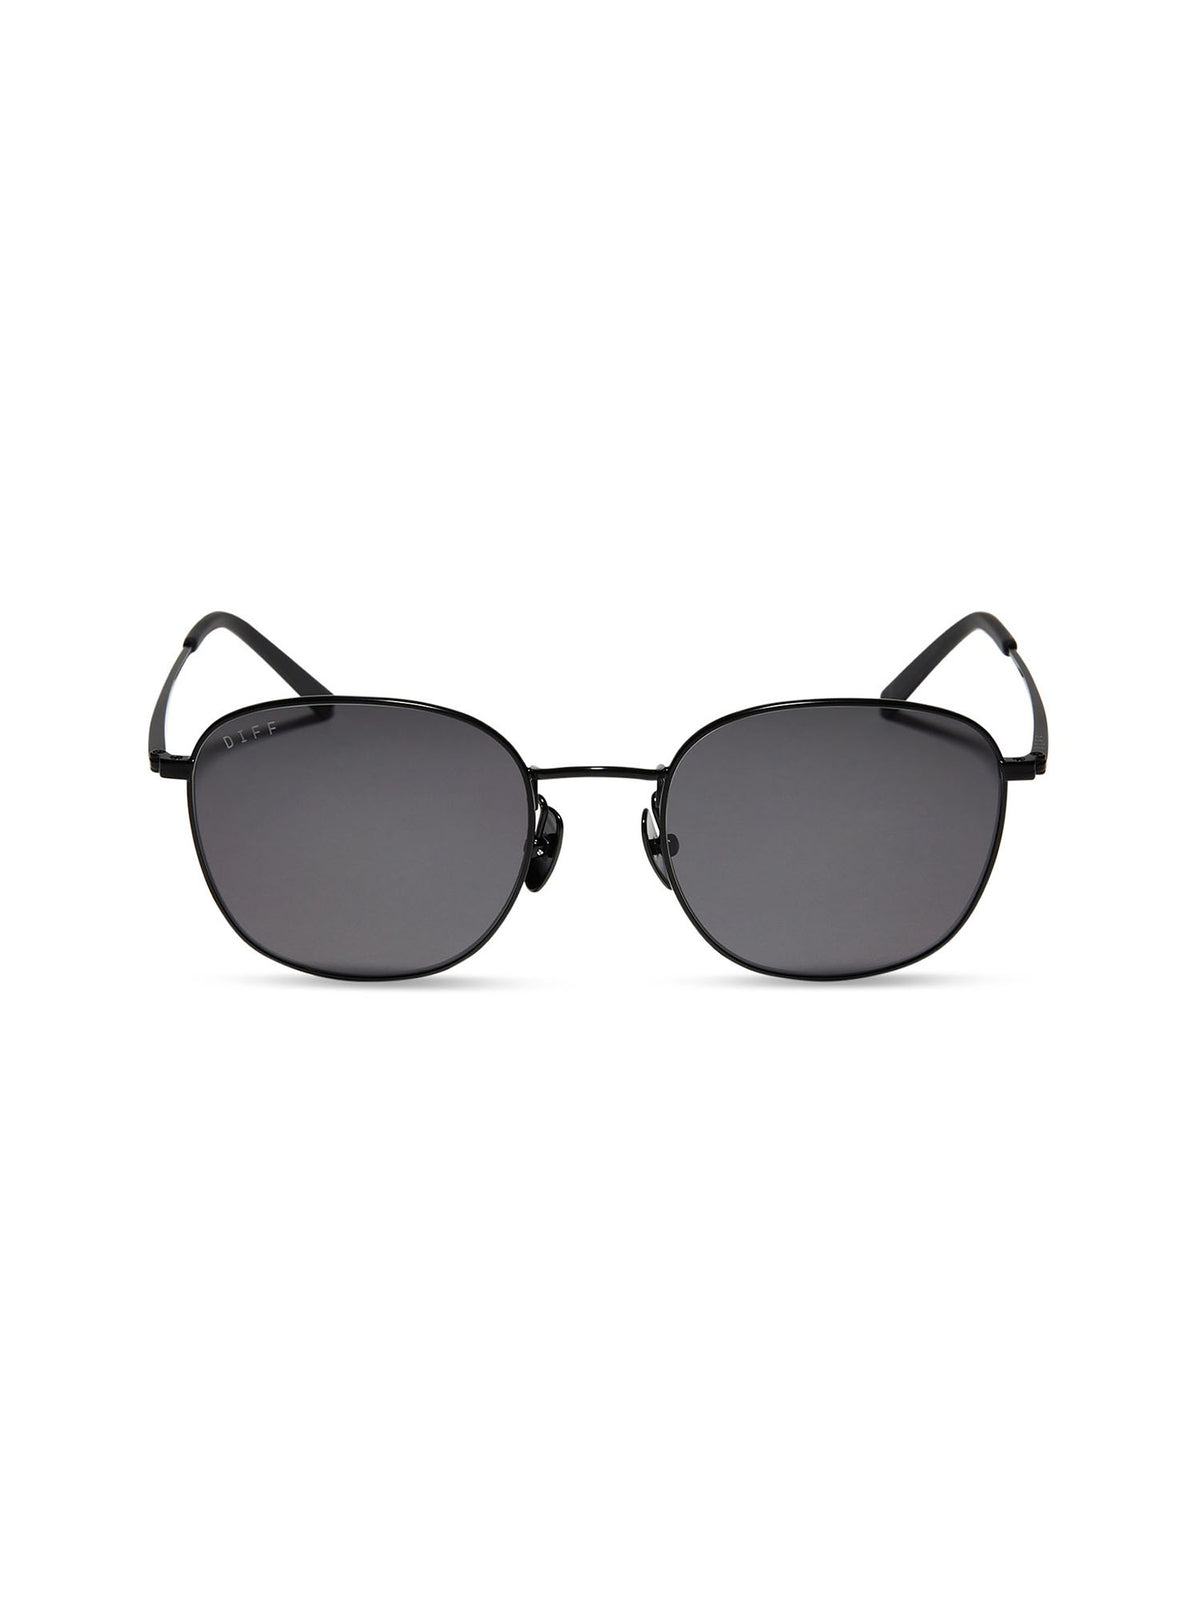 diff eyewear axel sunglasses in matte black grey